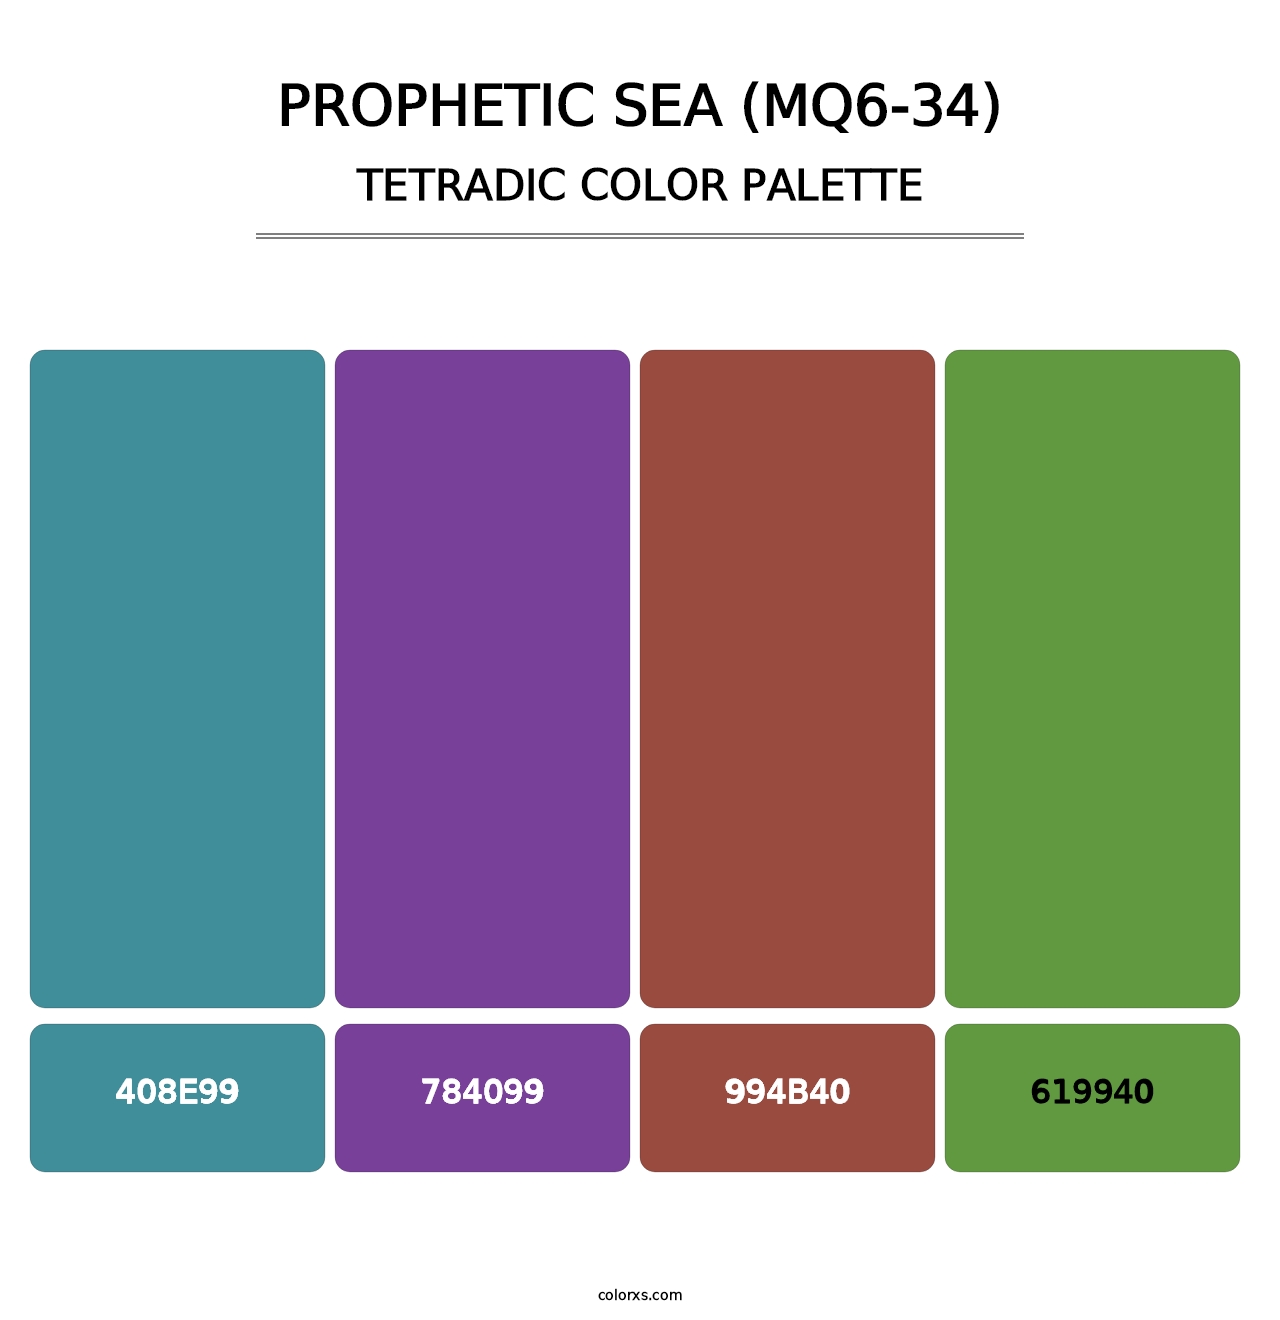 Prophetic Sea (MQ6-34) - Tetradic Color Palette